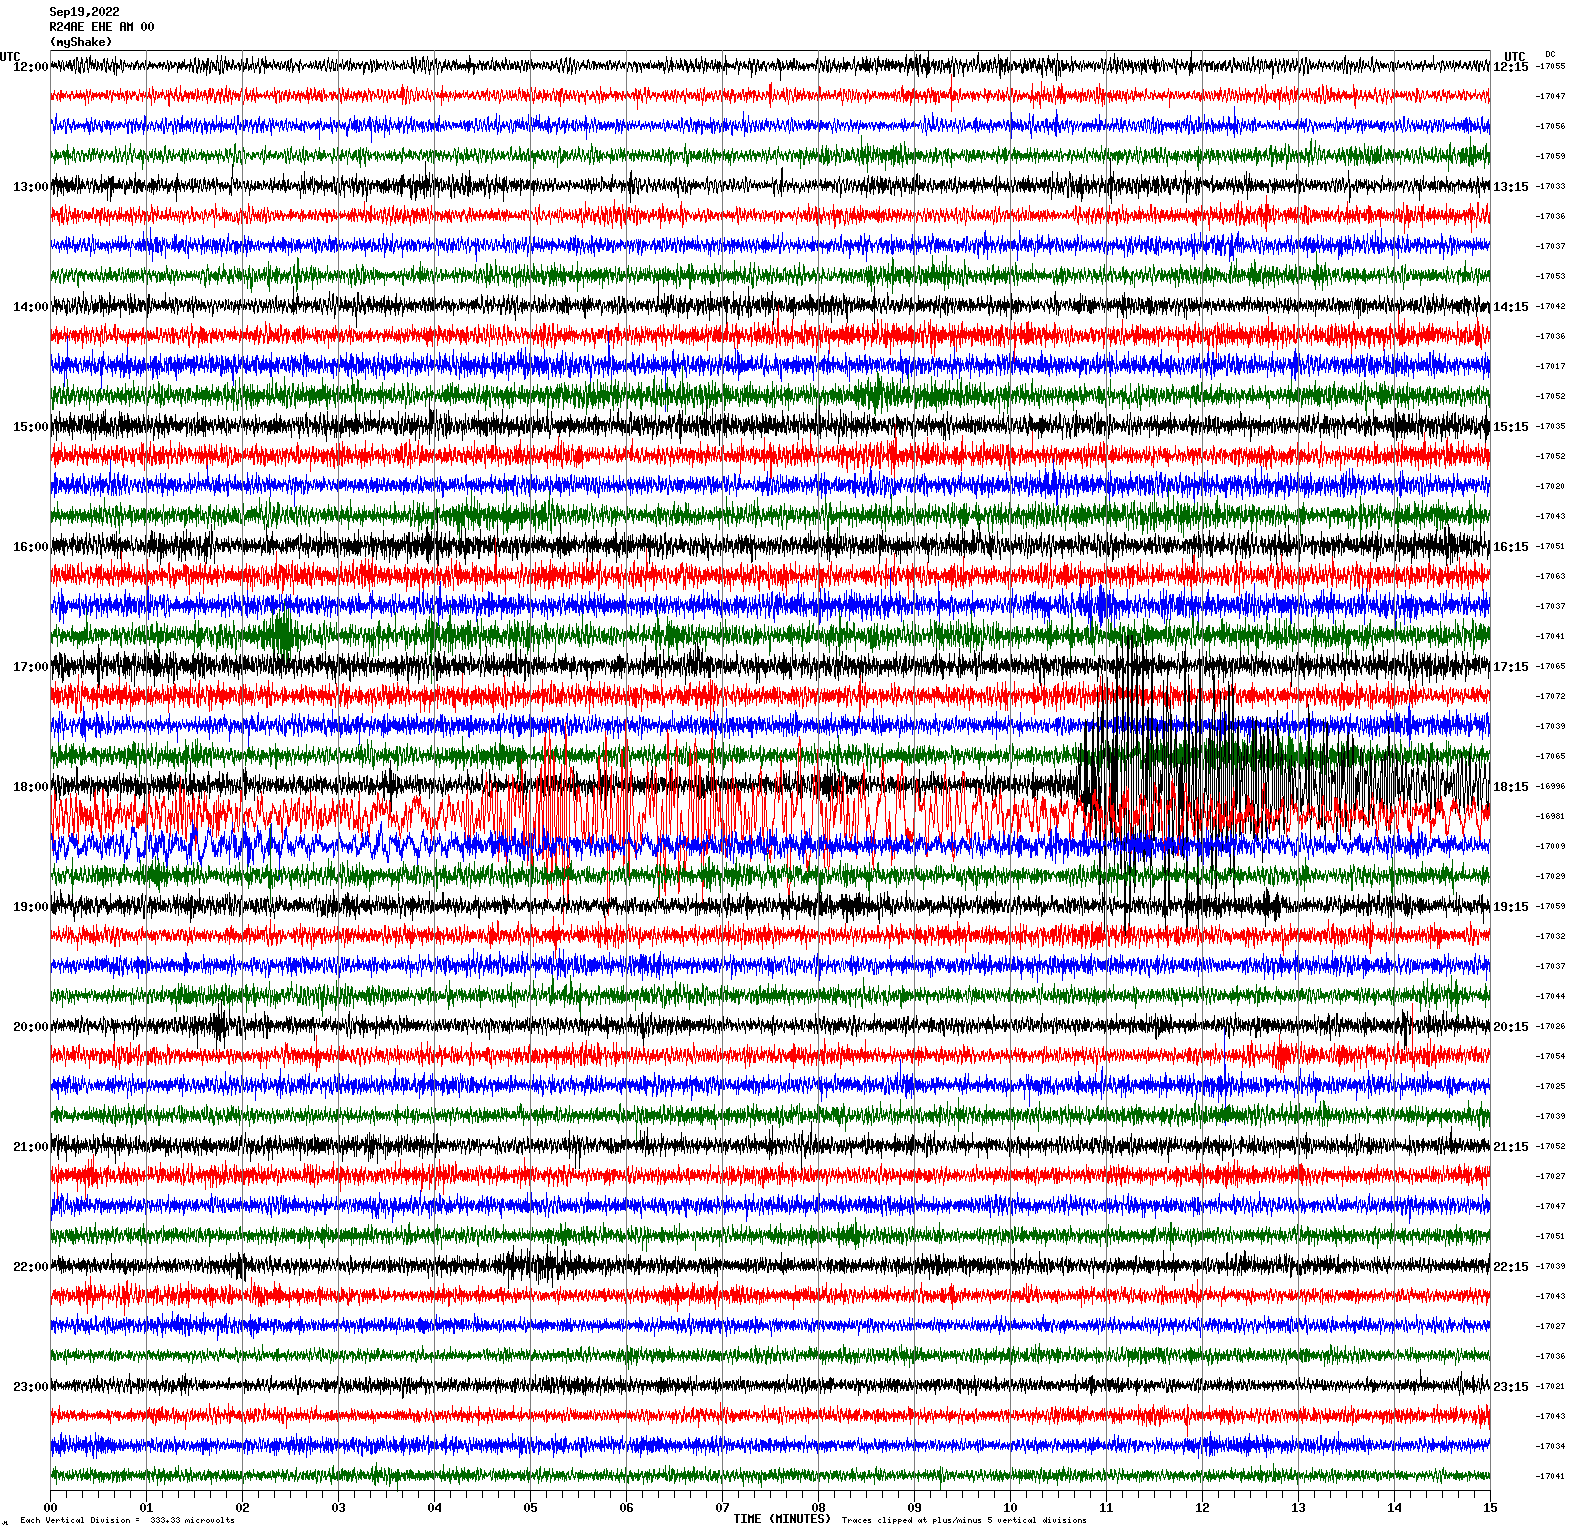 /seismic-data/R24AE/R24AE_EHE_AM_00.2022091912.gif